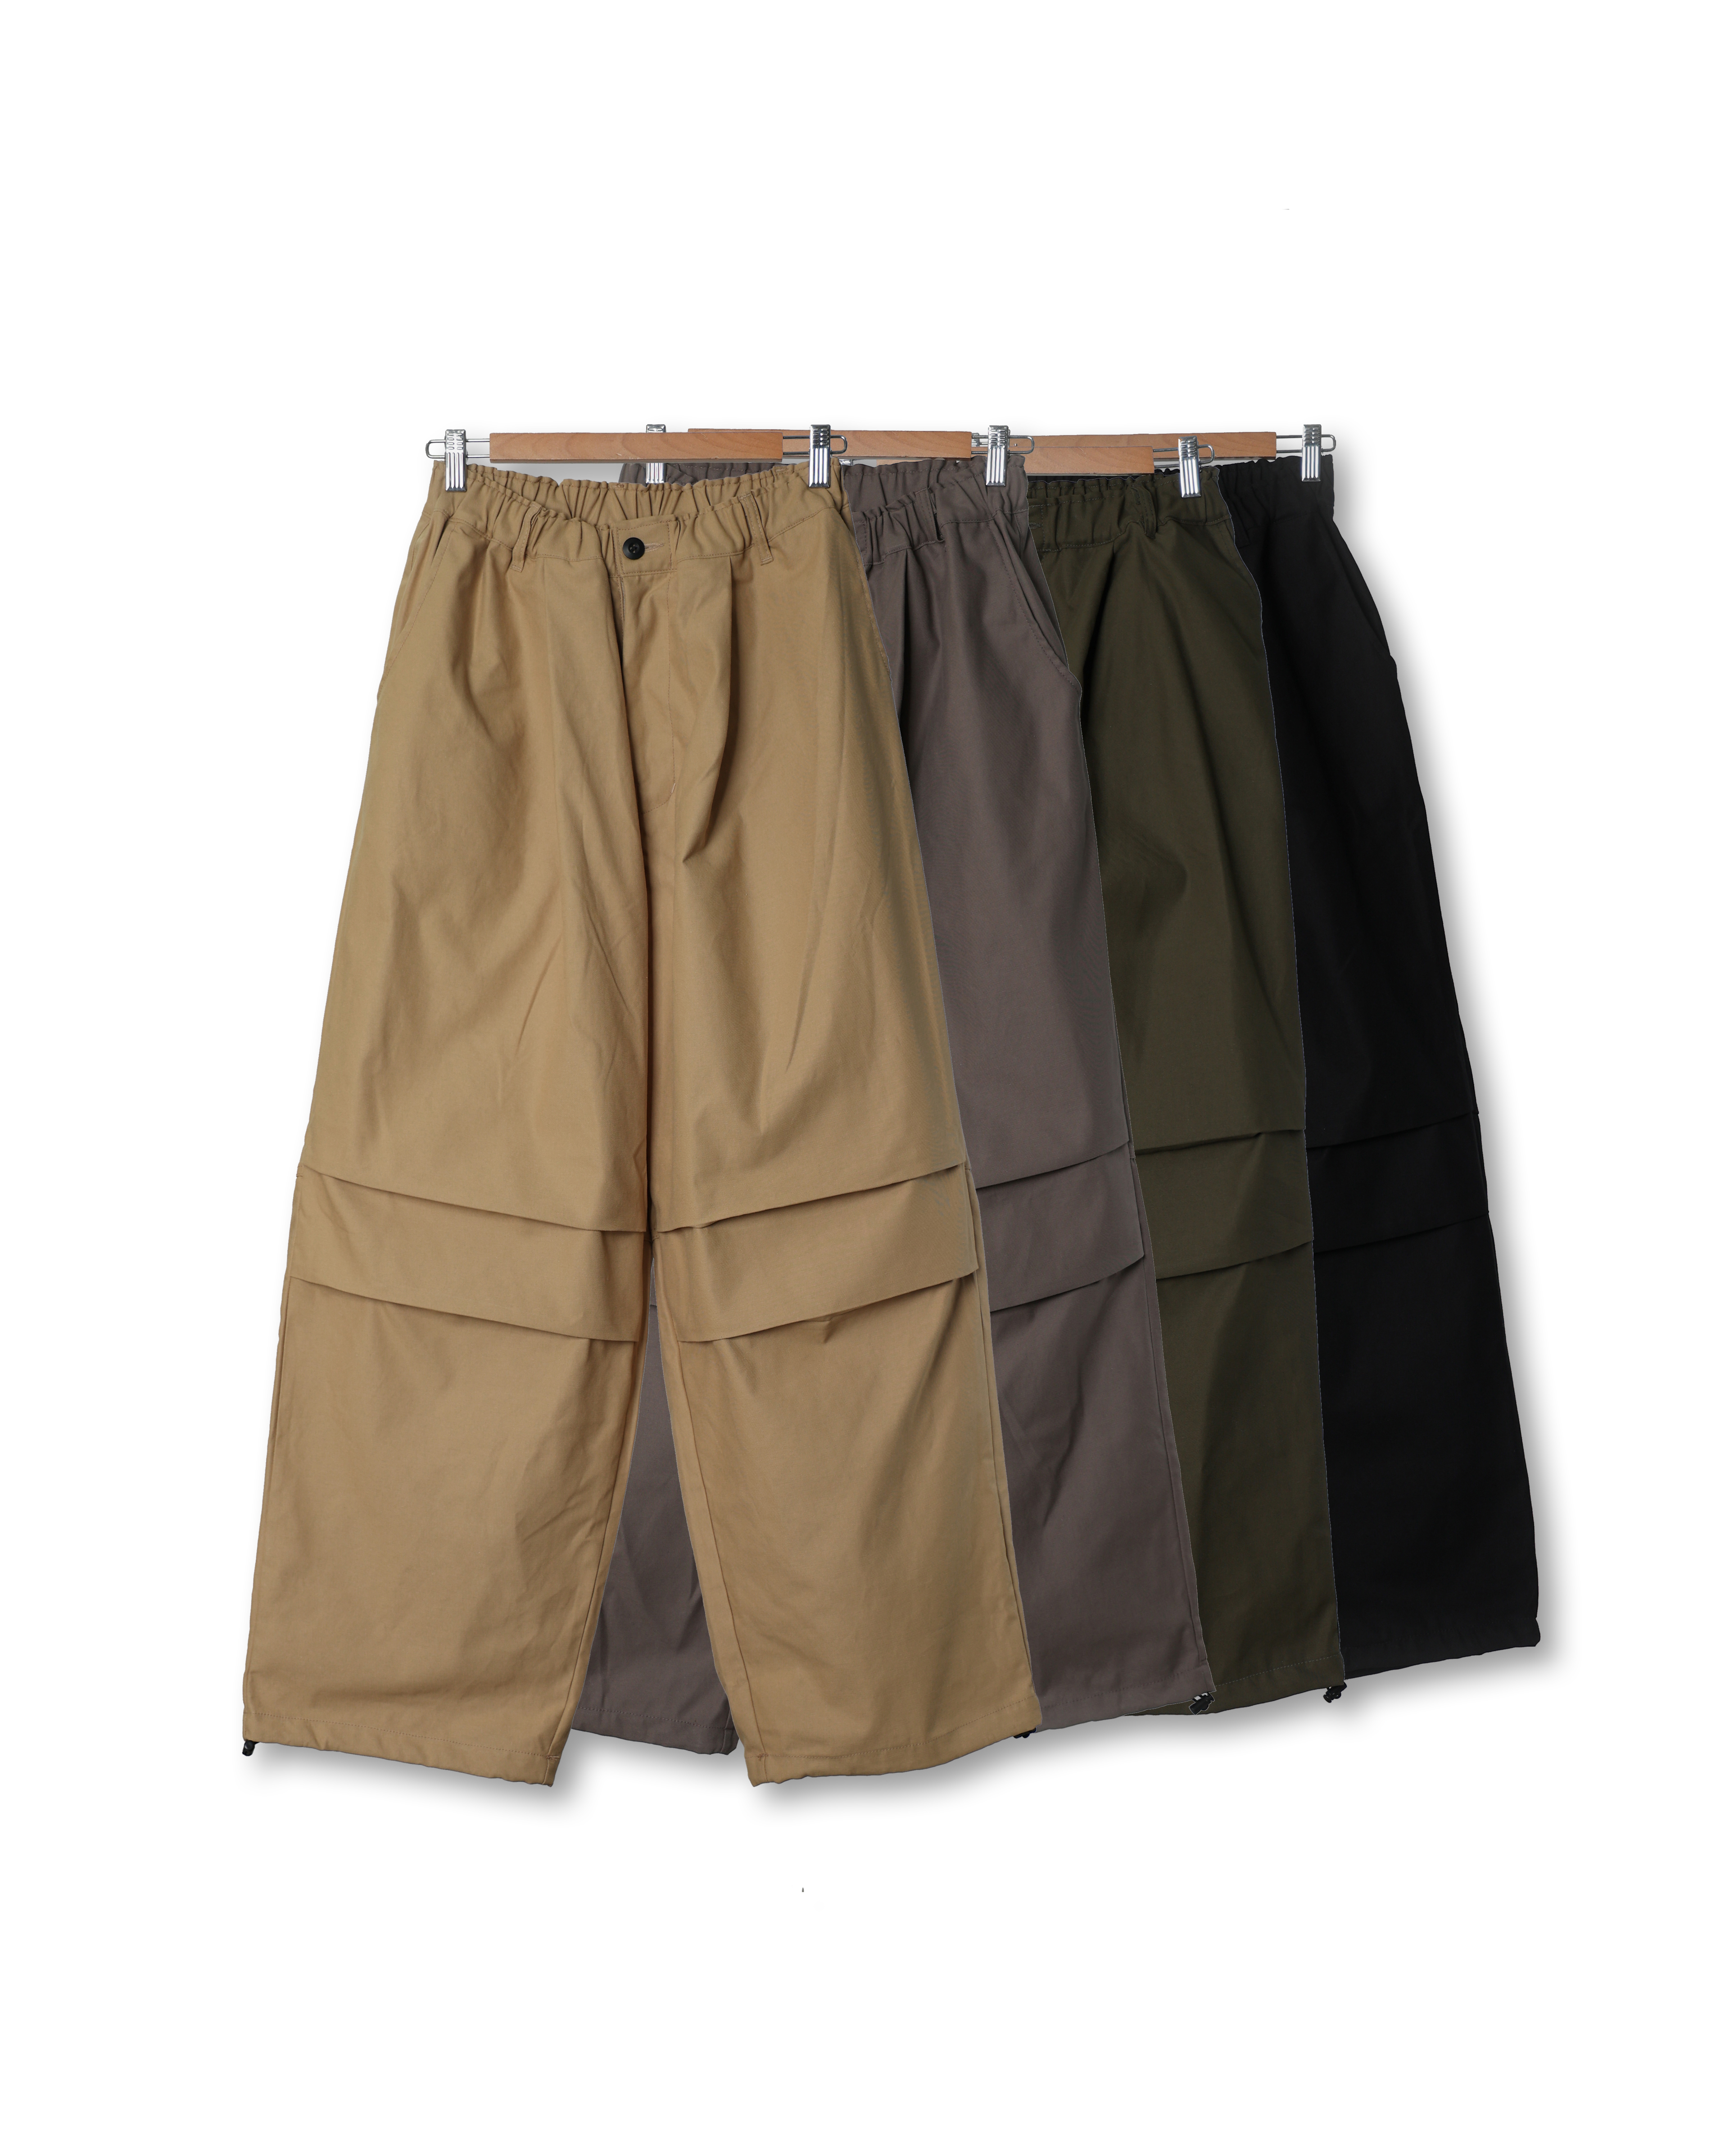 WAOT Bulky Cotton Parachute Pants (Black/Olive/Gray/Beige)